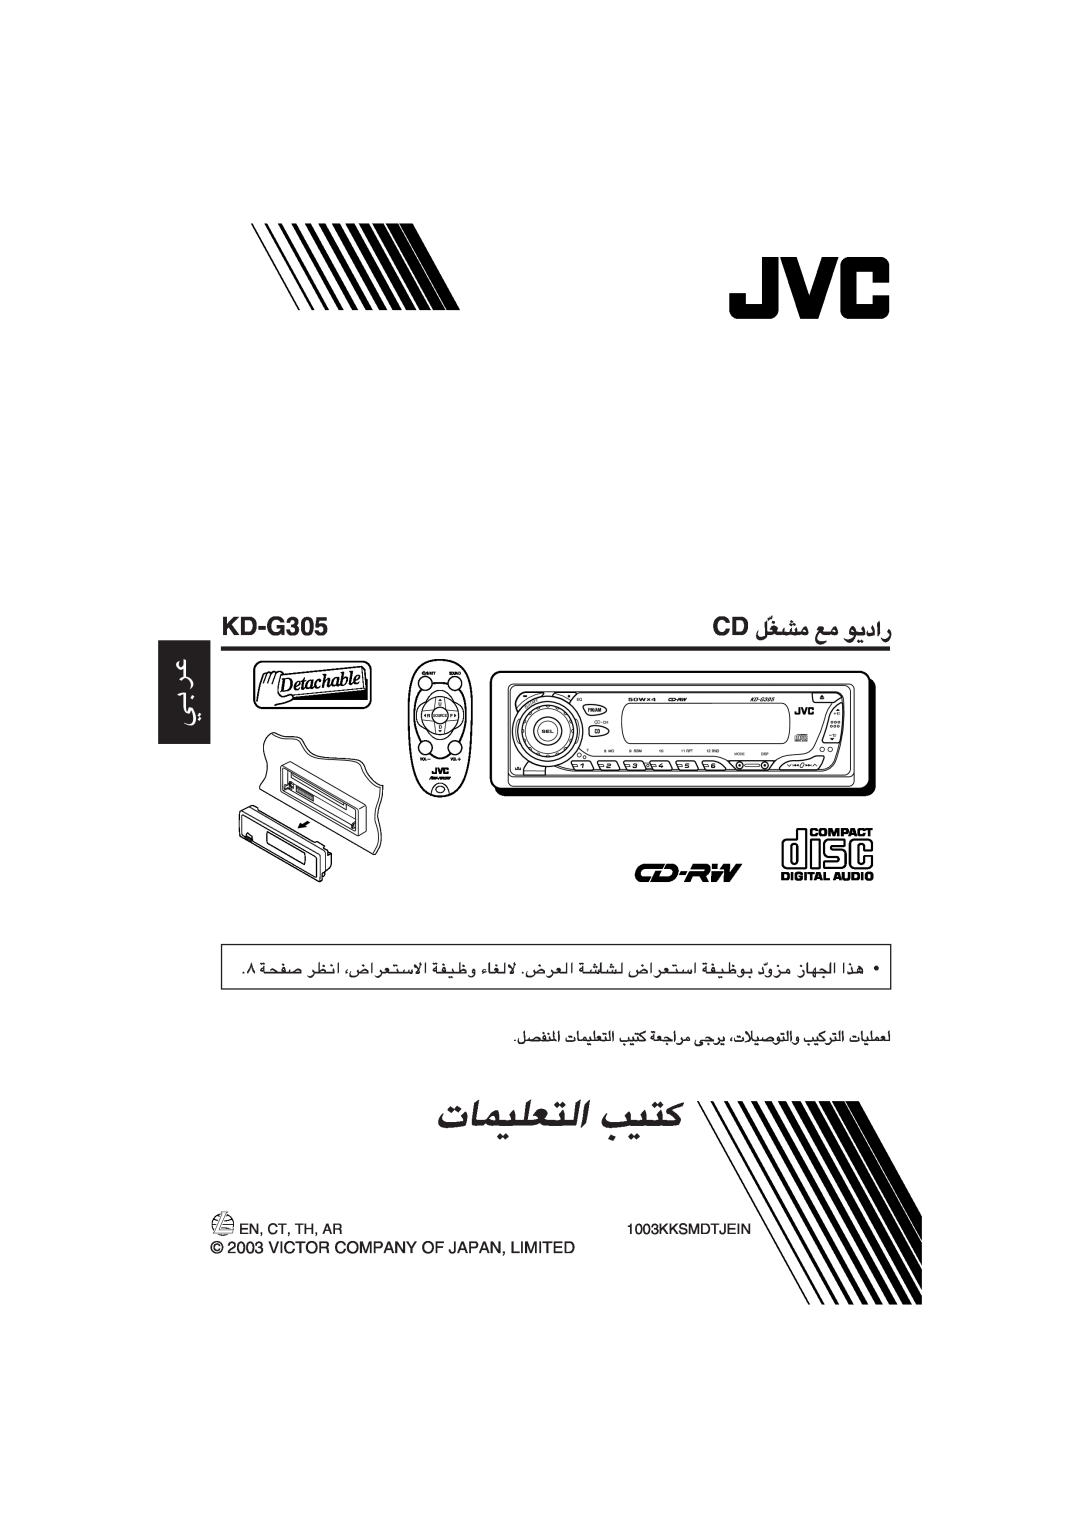 JVC KD-G305 manual R SOURCE F ULOKF²«VO², CD qÒGAlu¹œ«, Sound 